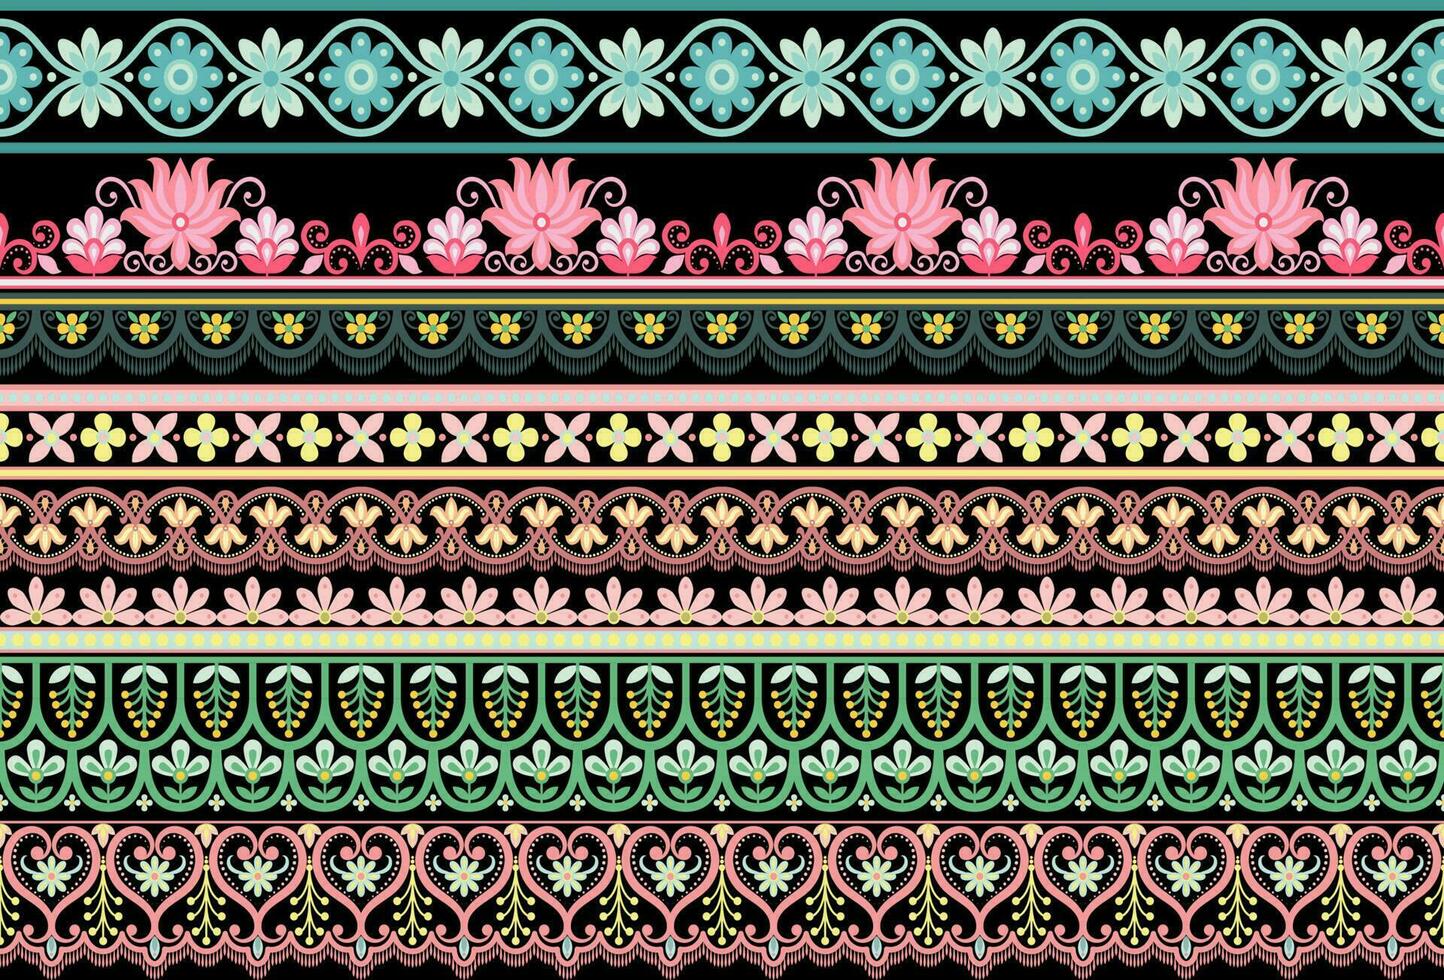 conjunto 5 5 botánico floral sin costura. antecedentes sin costura modelo geométrico étnico modelo diseño para fondo, alfombra, fondo de pantalla, ropa, envase, batik, tela, impresión textil ilustración. vector